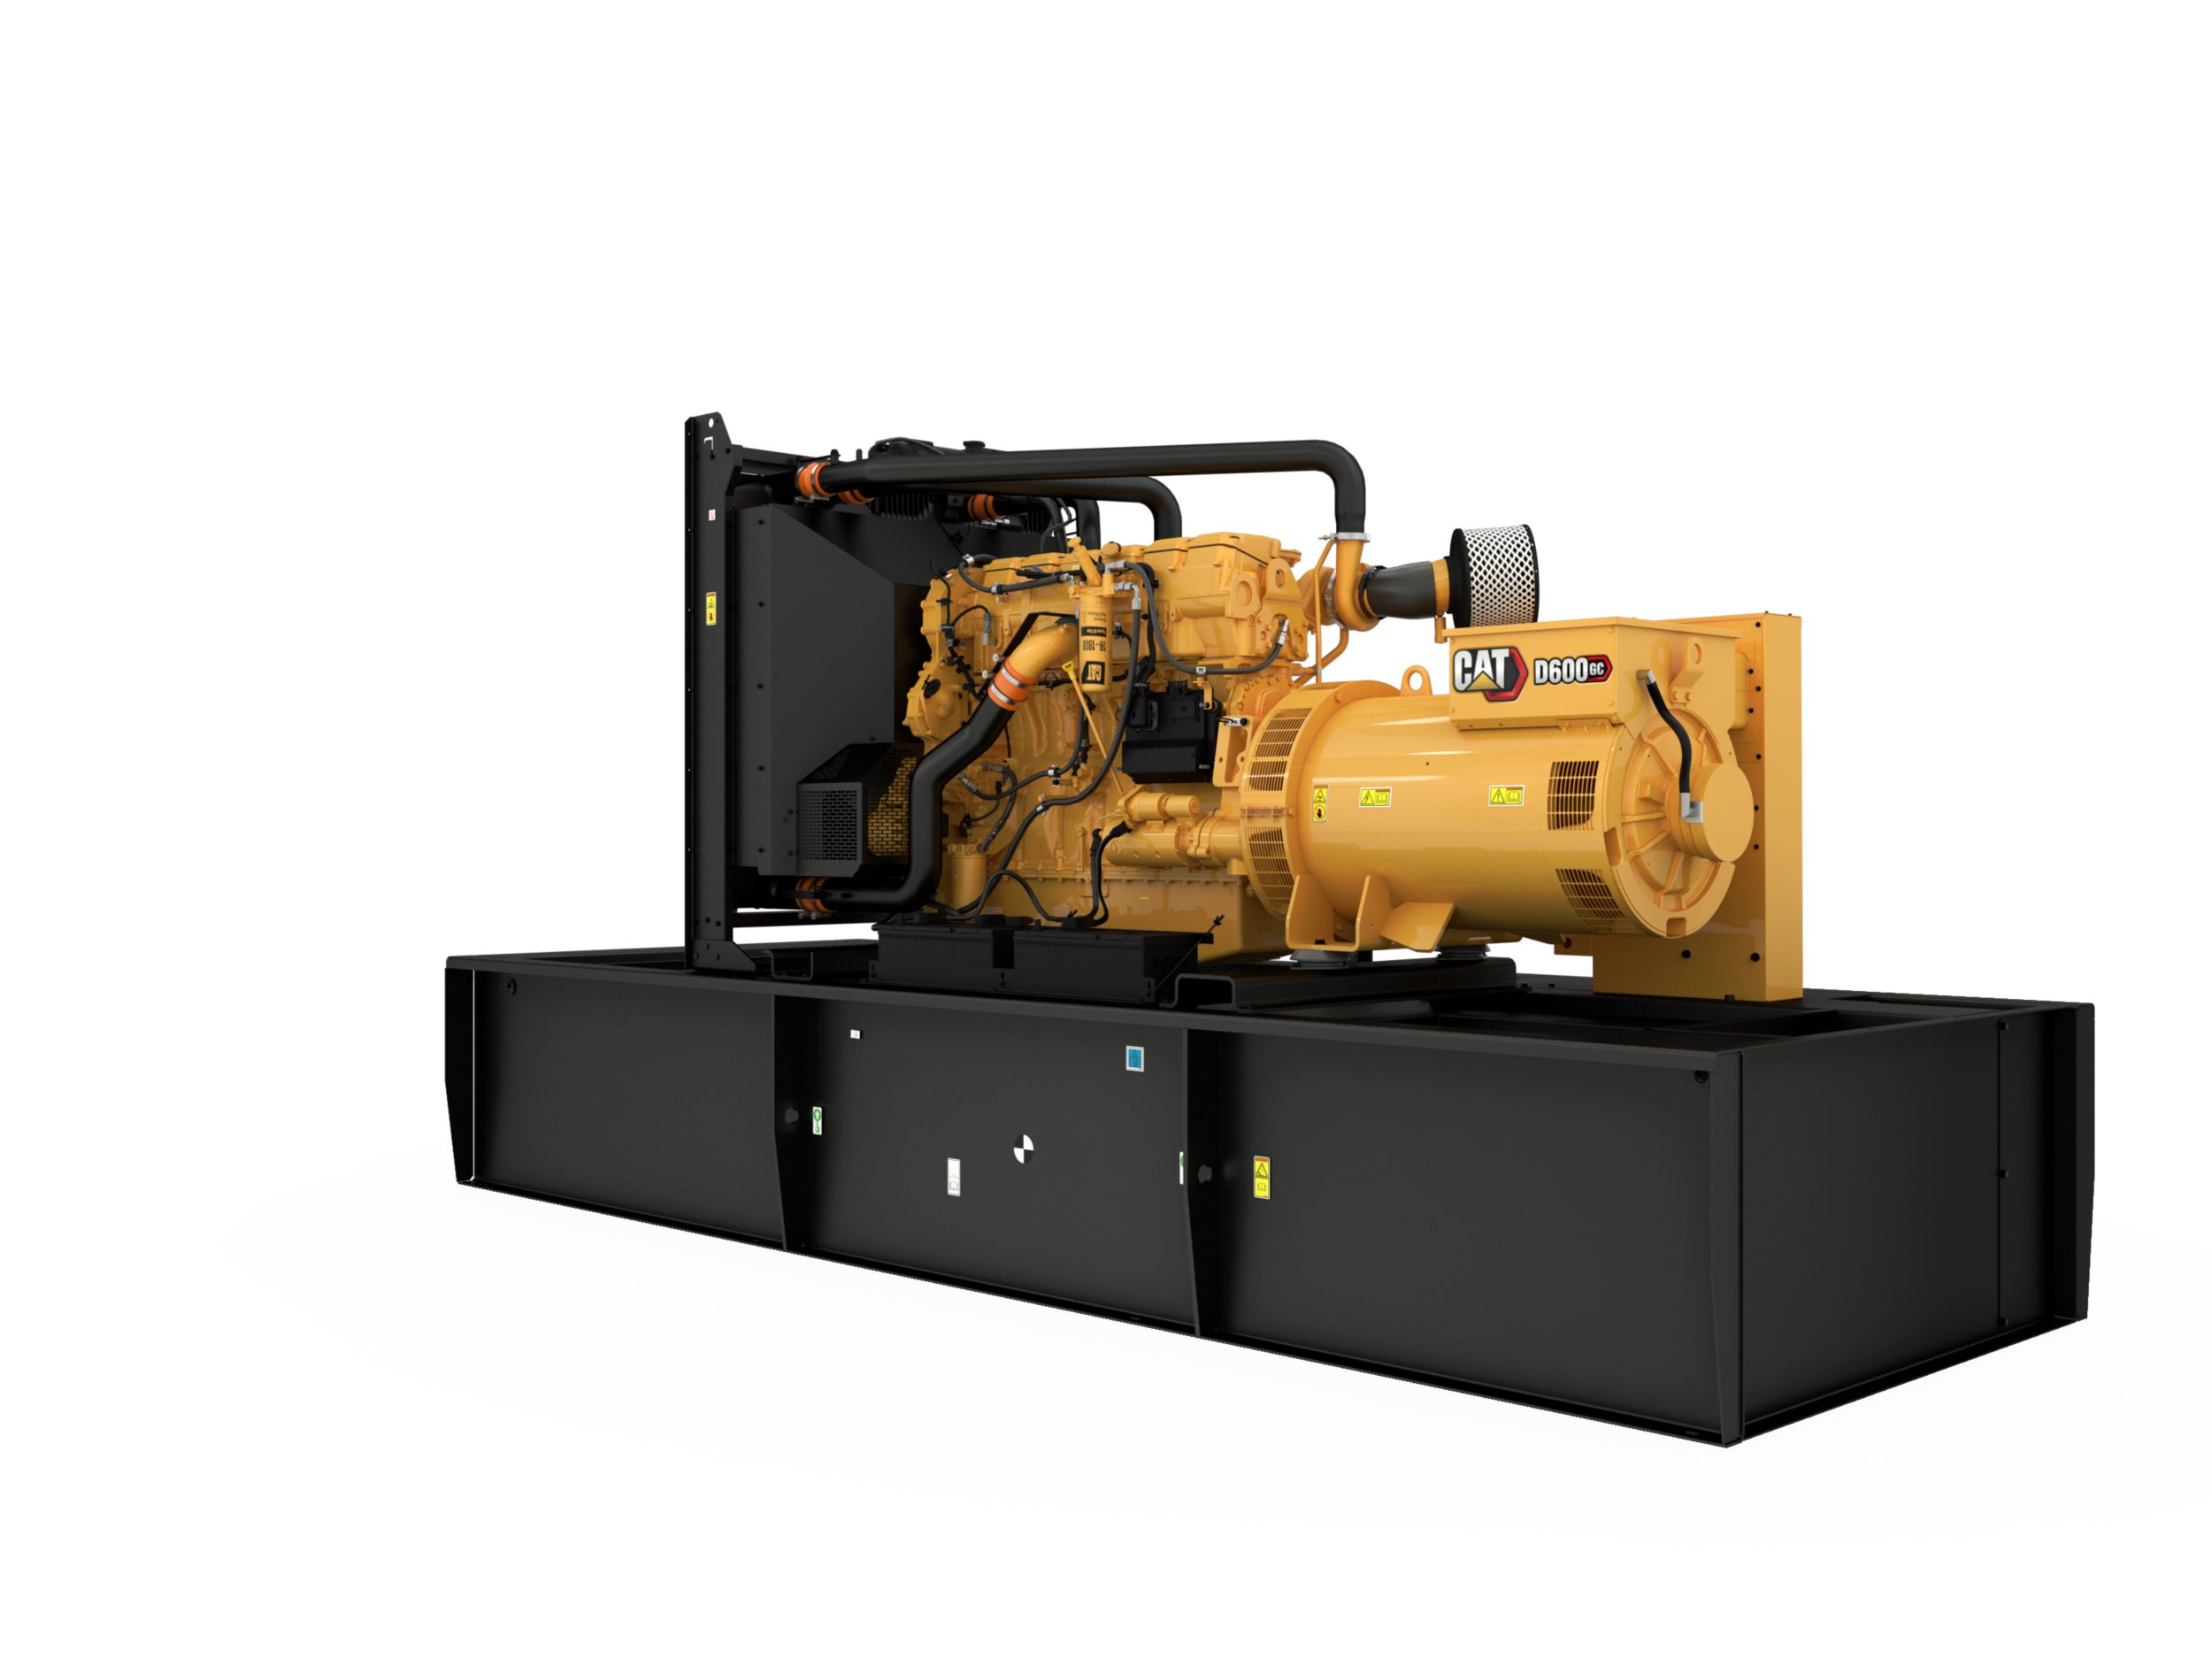 D600 GC (60 Hz) Generator Set